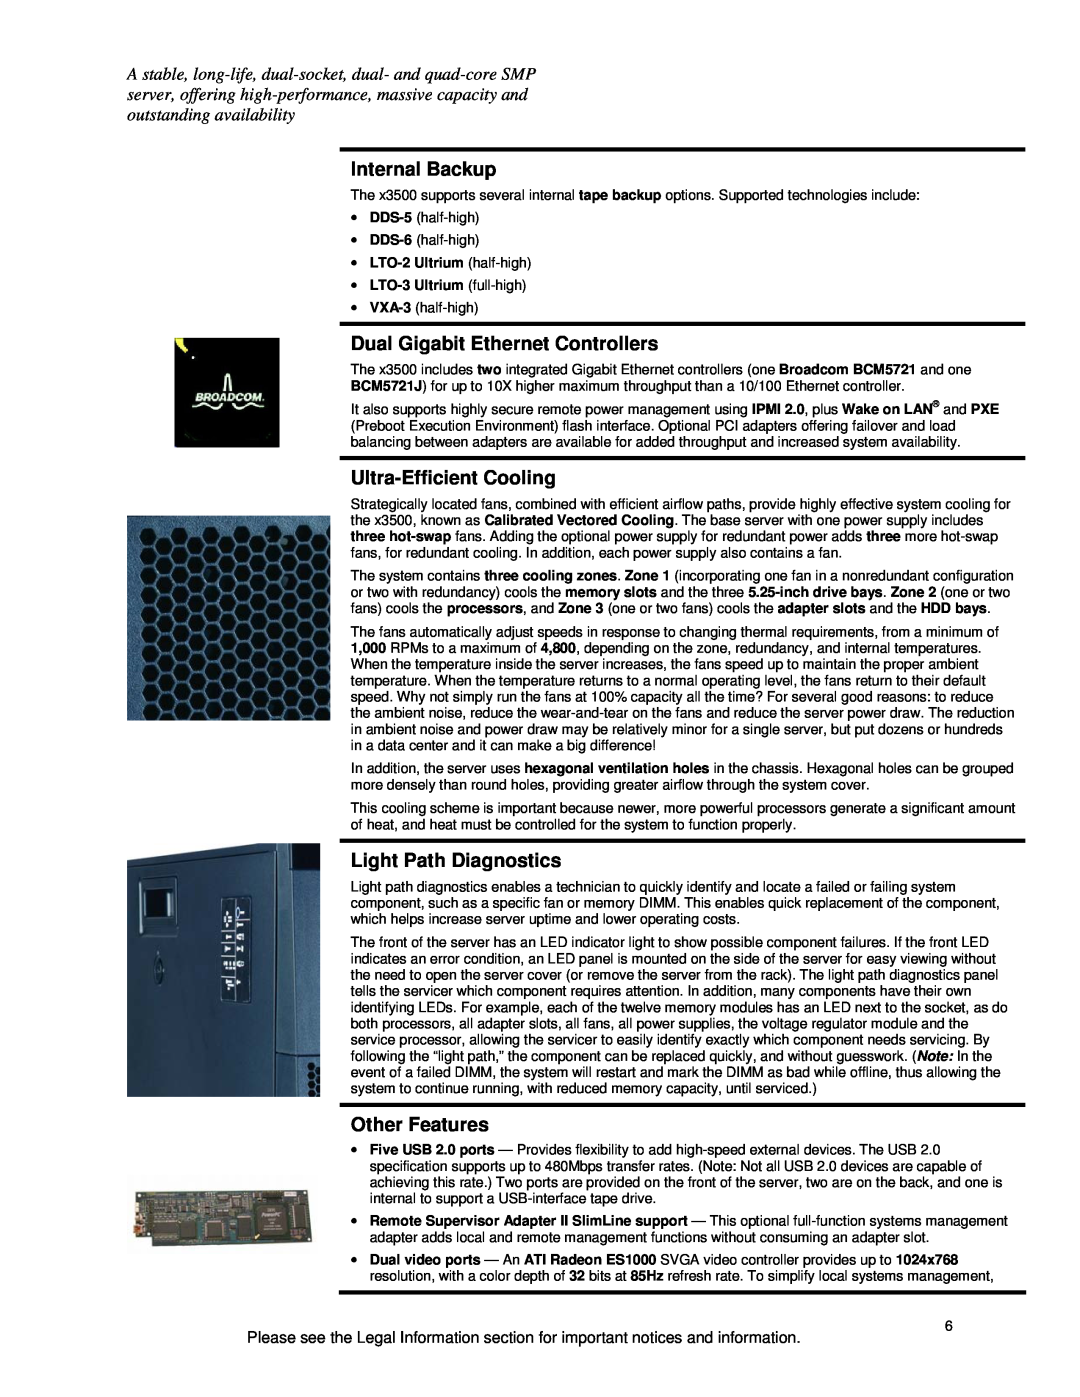 IBM X3500 Internal Backup, Dual Gigabit Ethernet Controllers, Ultra-Efficient Cooling, Light Path Diagnostics 